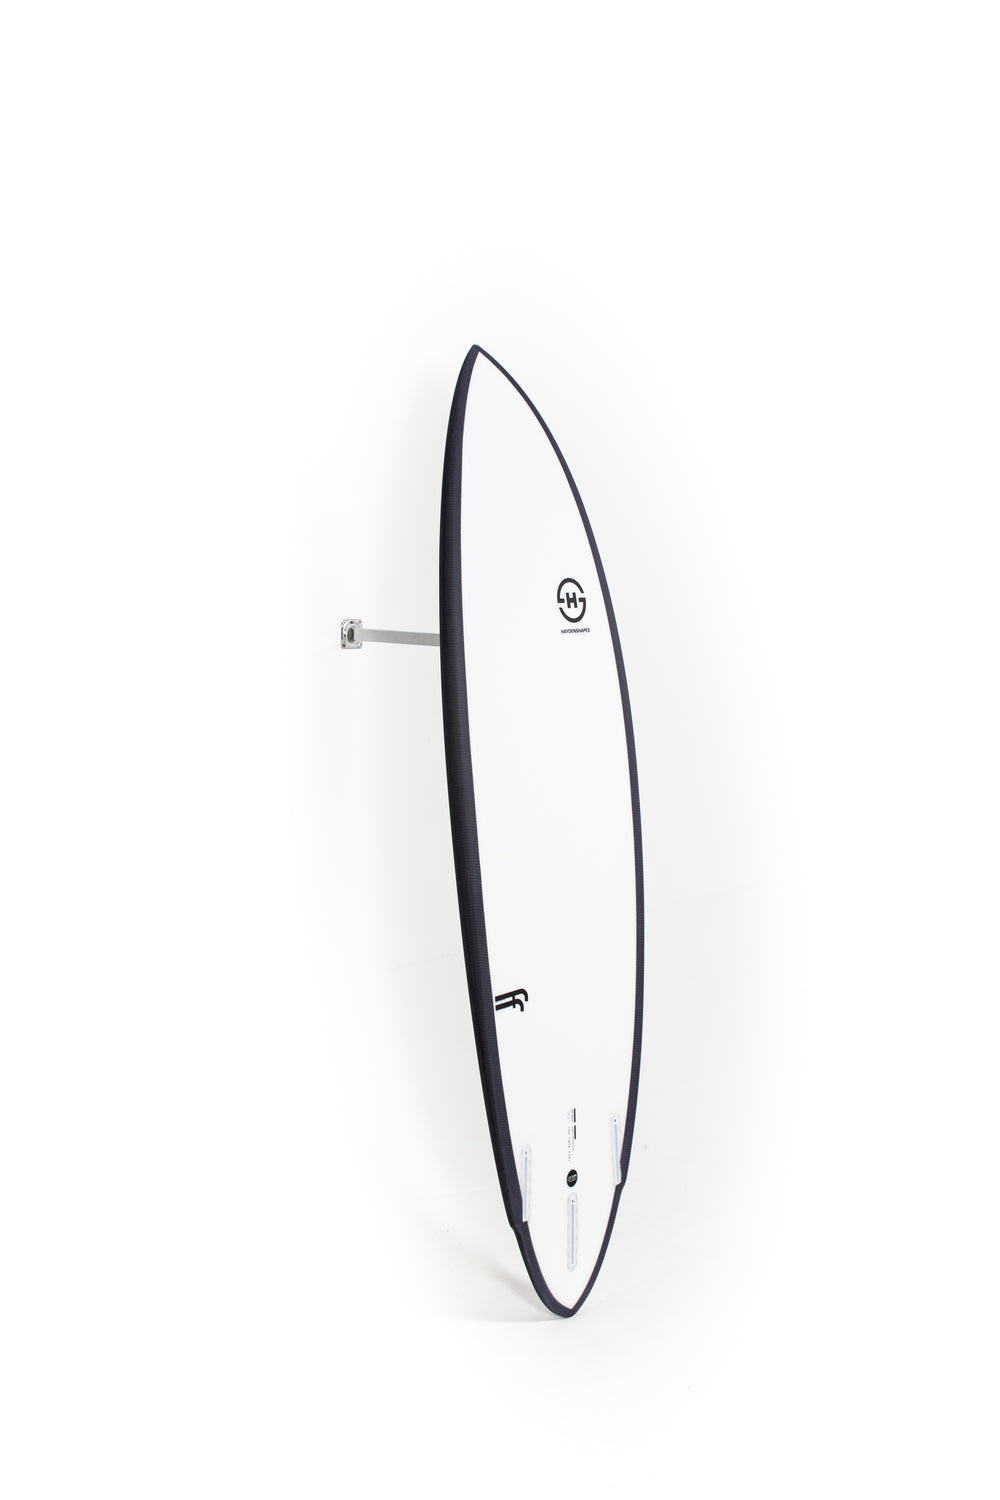 HaydenShapes Surfboard - HYPTO KRYPTO TWIN PIN - 6'0